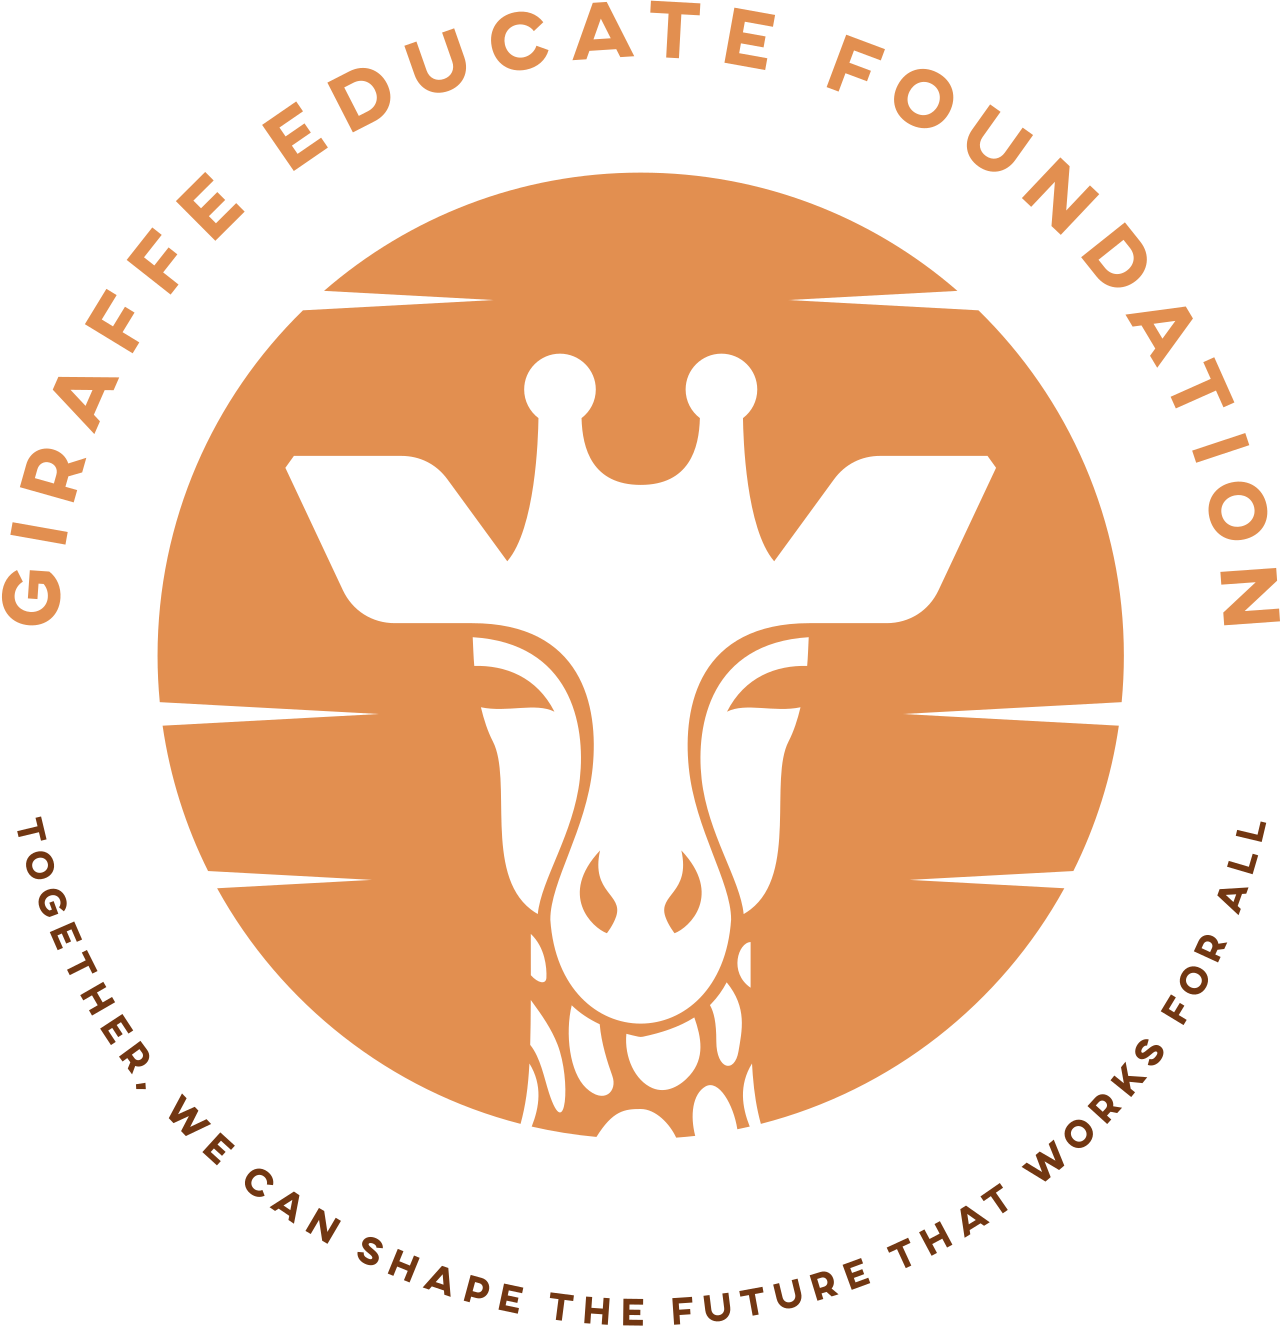 Giraffe Educate Foundation